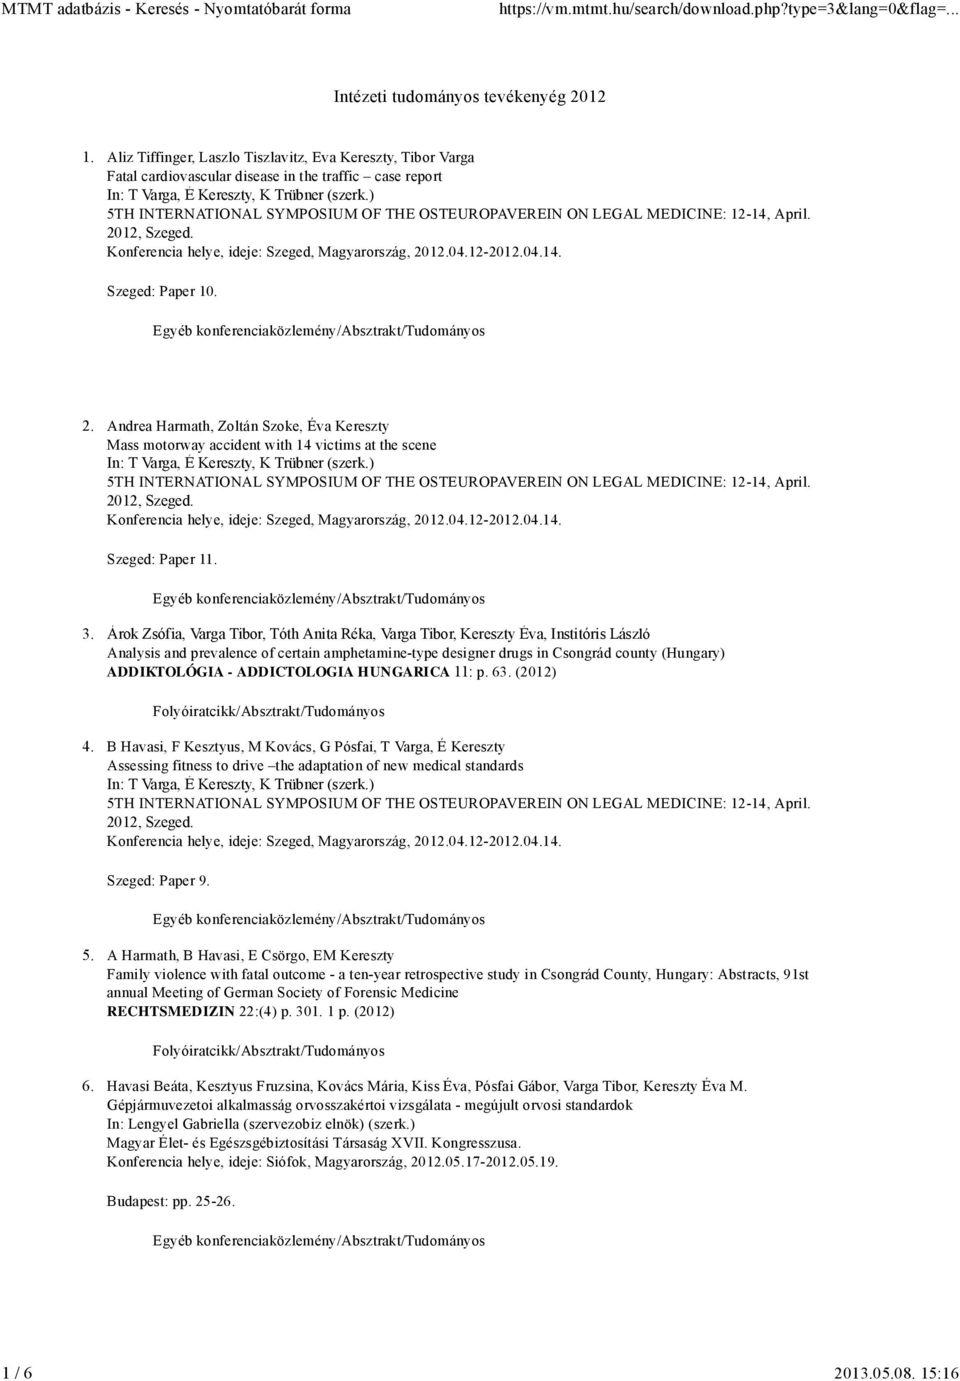 - ADDICTOLOGIA HUNGARI CA 11: p. 63. (2012) 4. B Havasi, F Kesztyus, M Kovács, G Pósfai, T Varga, É Kereszty Assessing fitness to drive the adaptation of new medical standards Szeged: Paper 9. 5.